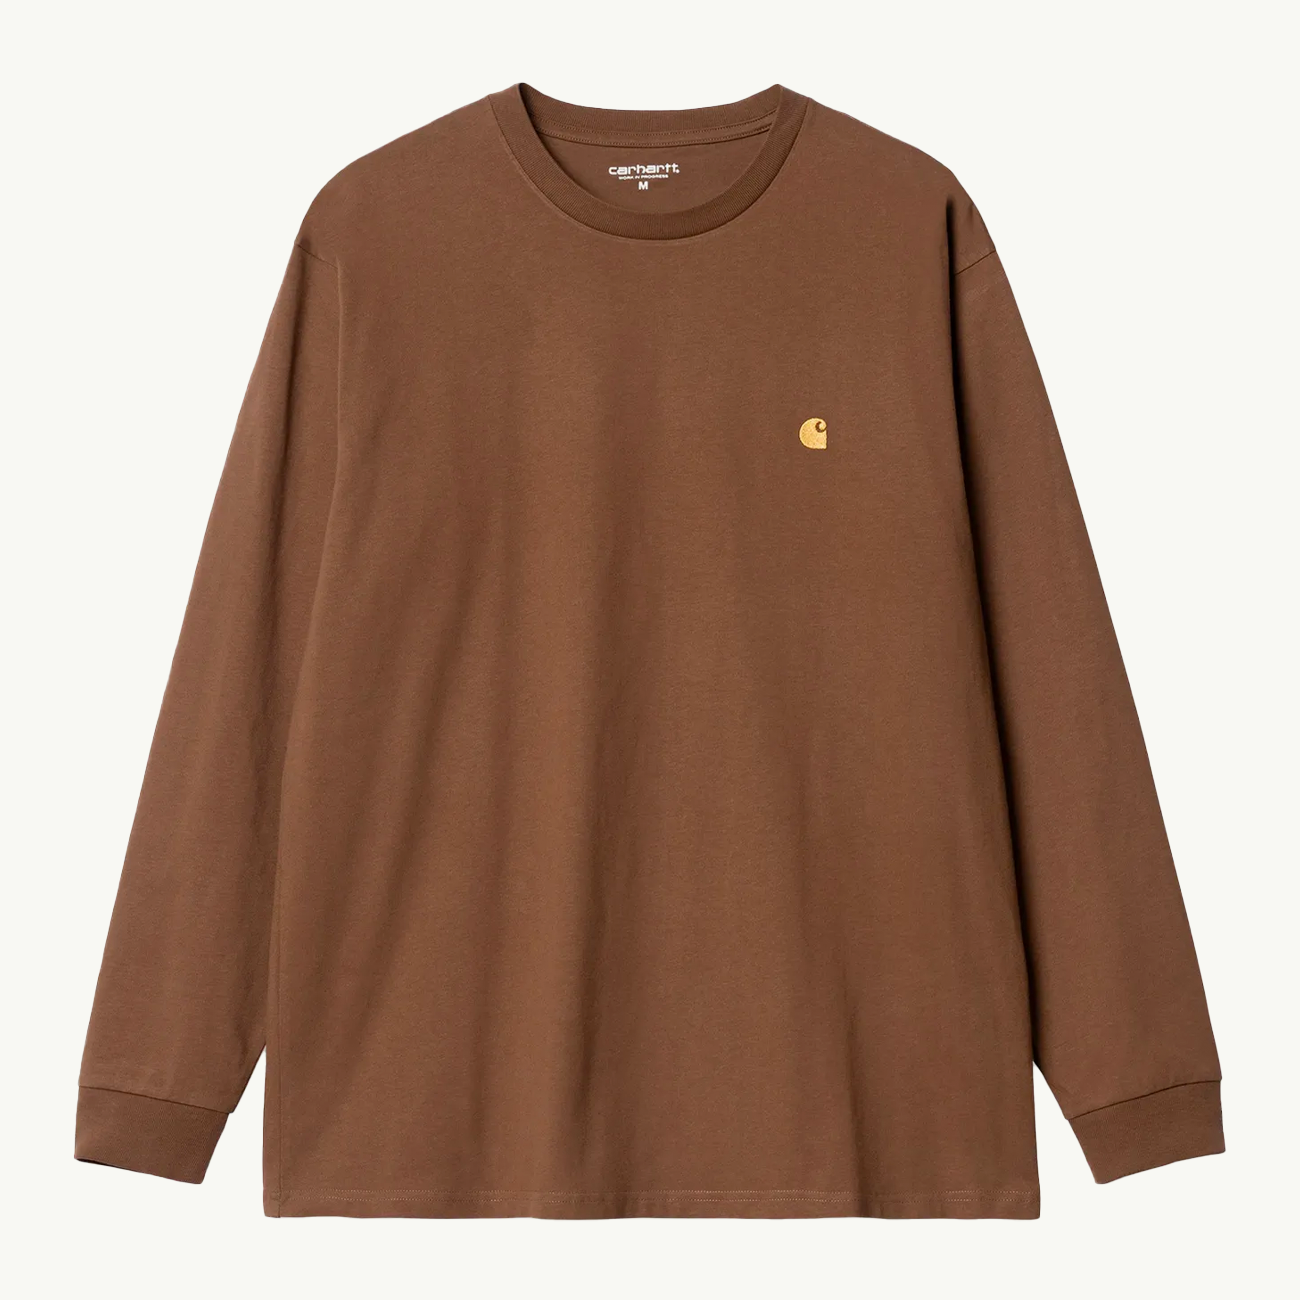 Chase LS T-Shirt - Tamarind/Gold